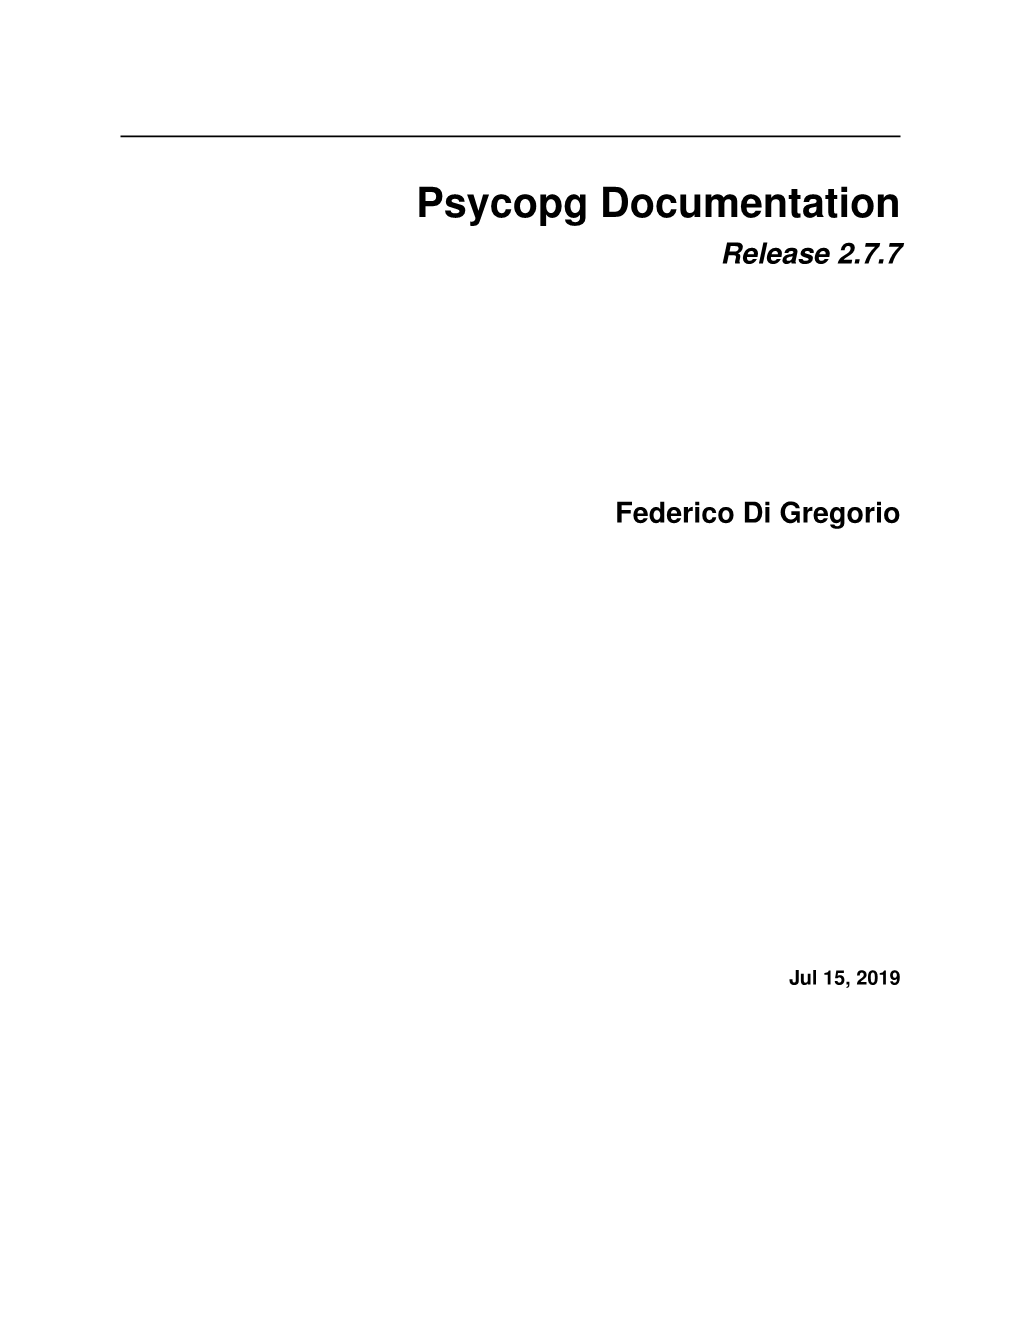 Psycopg Documentation Release 2.7.7